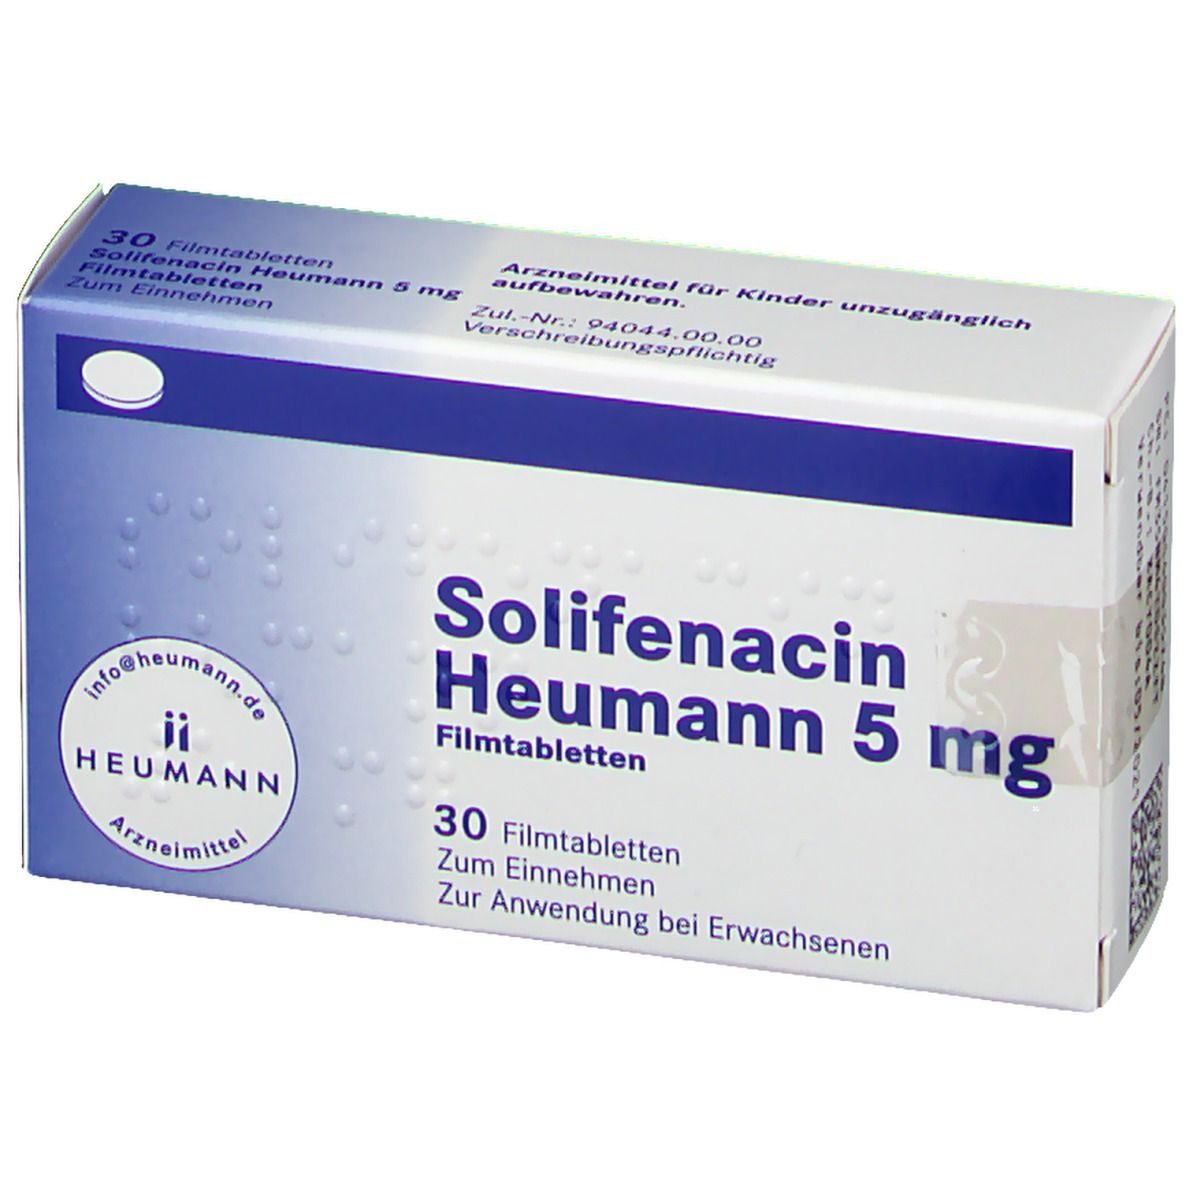 Solifenacin Heumann 5 mg